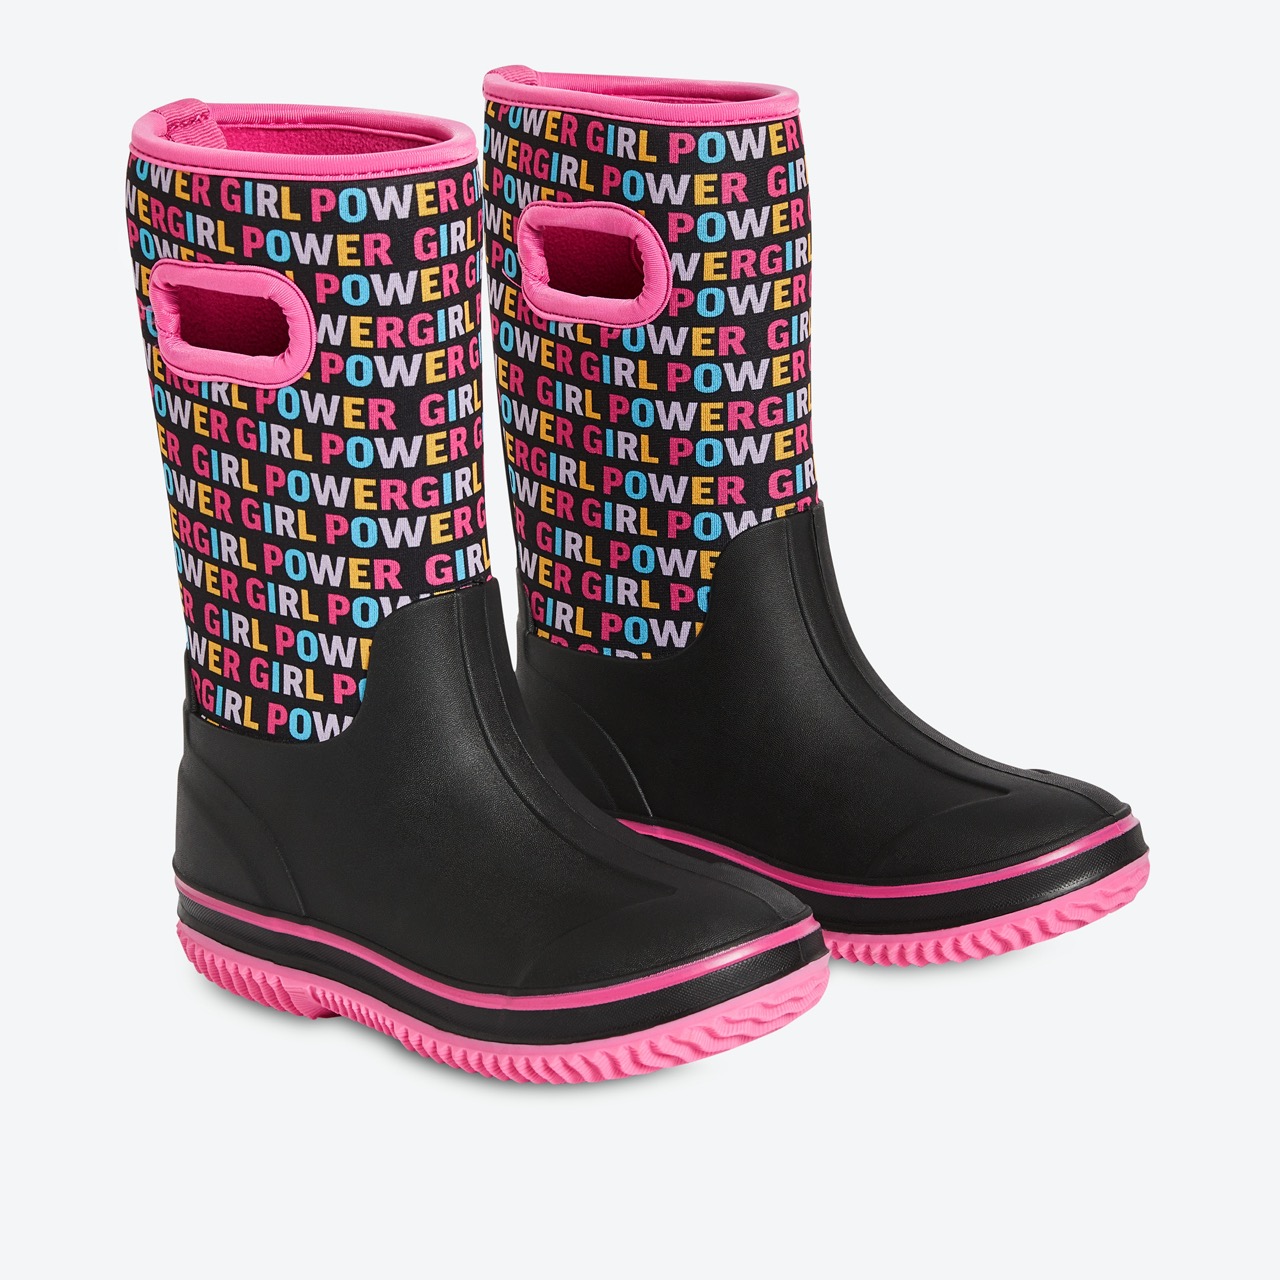 Kid girl rainboots large - stylish, budget-friendly back-to-school essentials from joe fresh